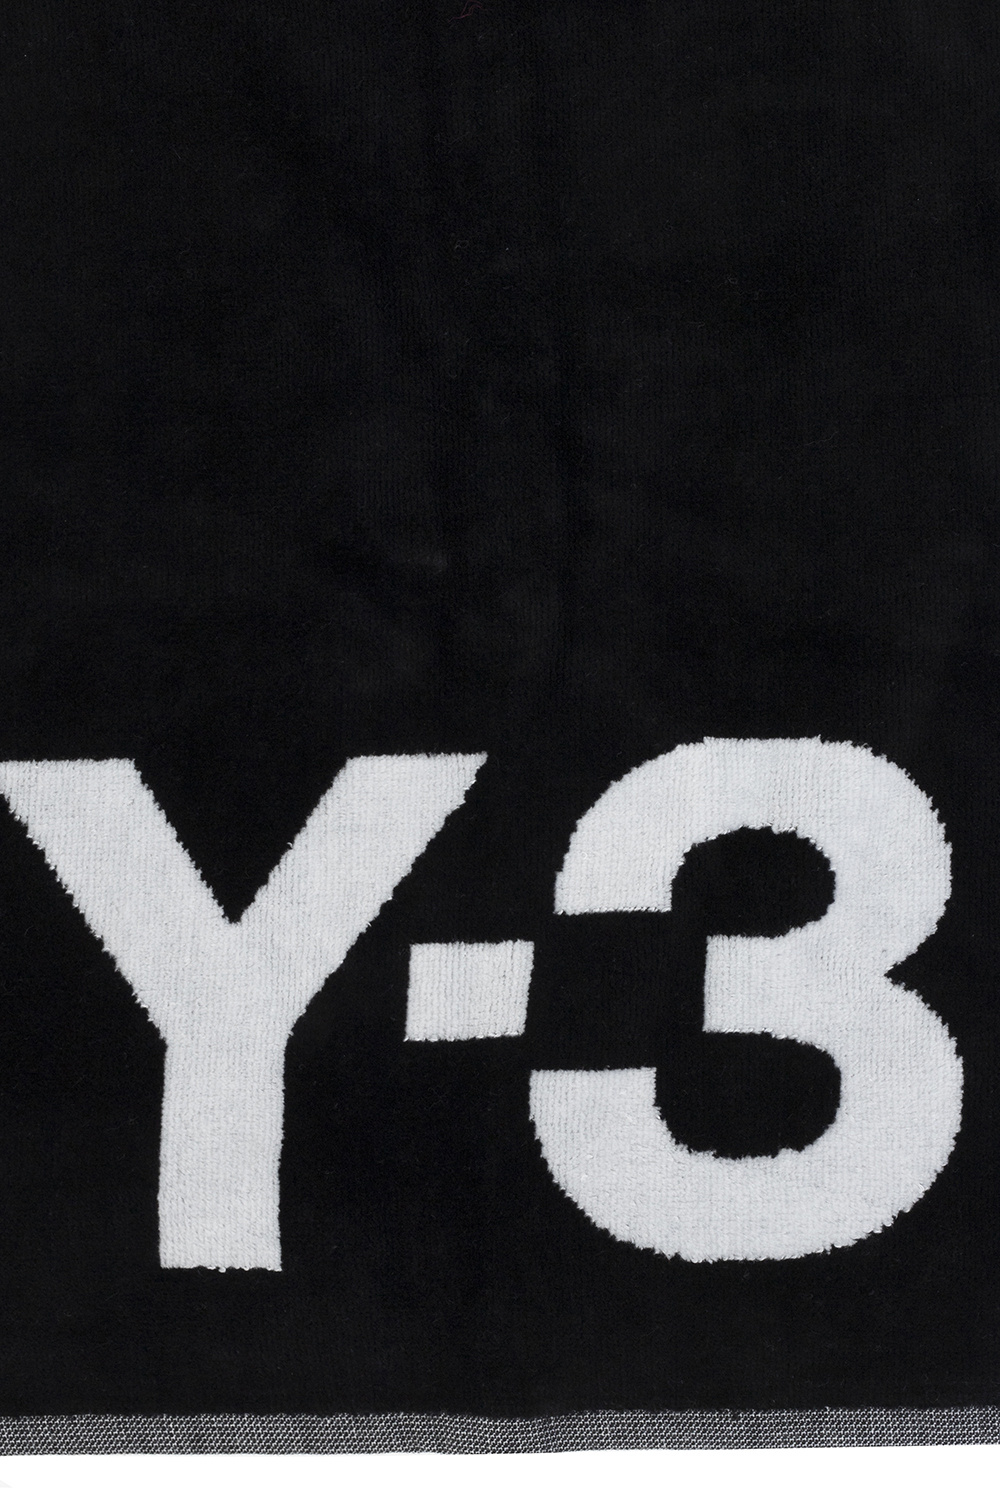 Y-3 Yohji Yamamoto Download the latest version of the app